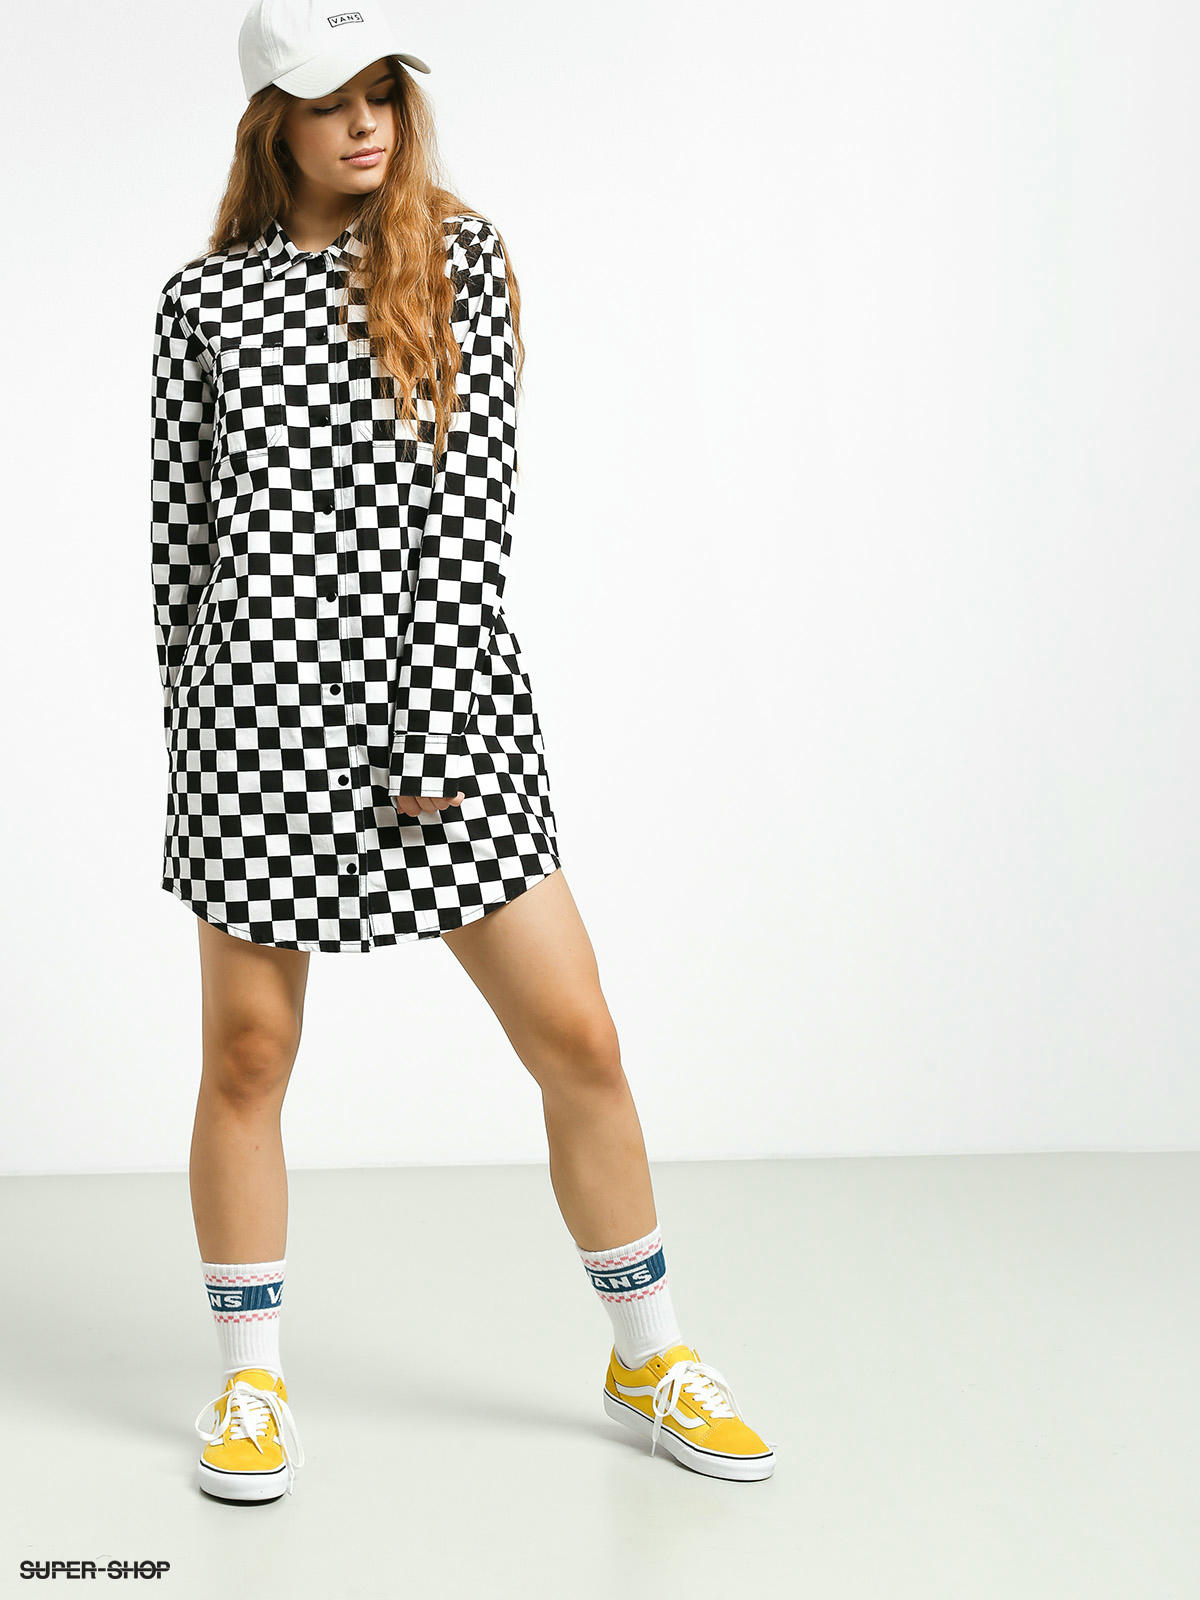 checkerboard vans dress